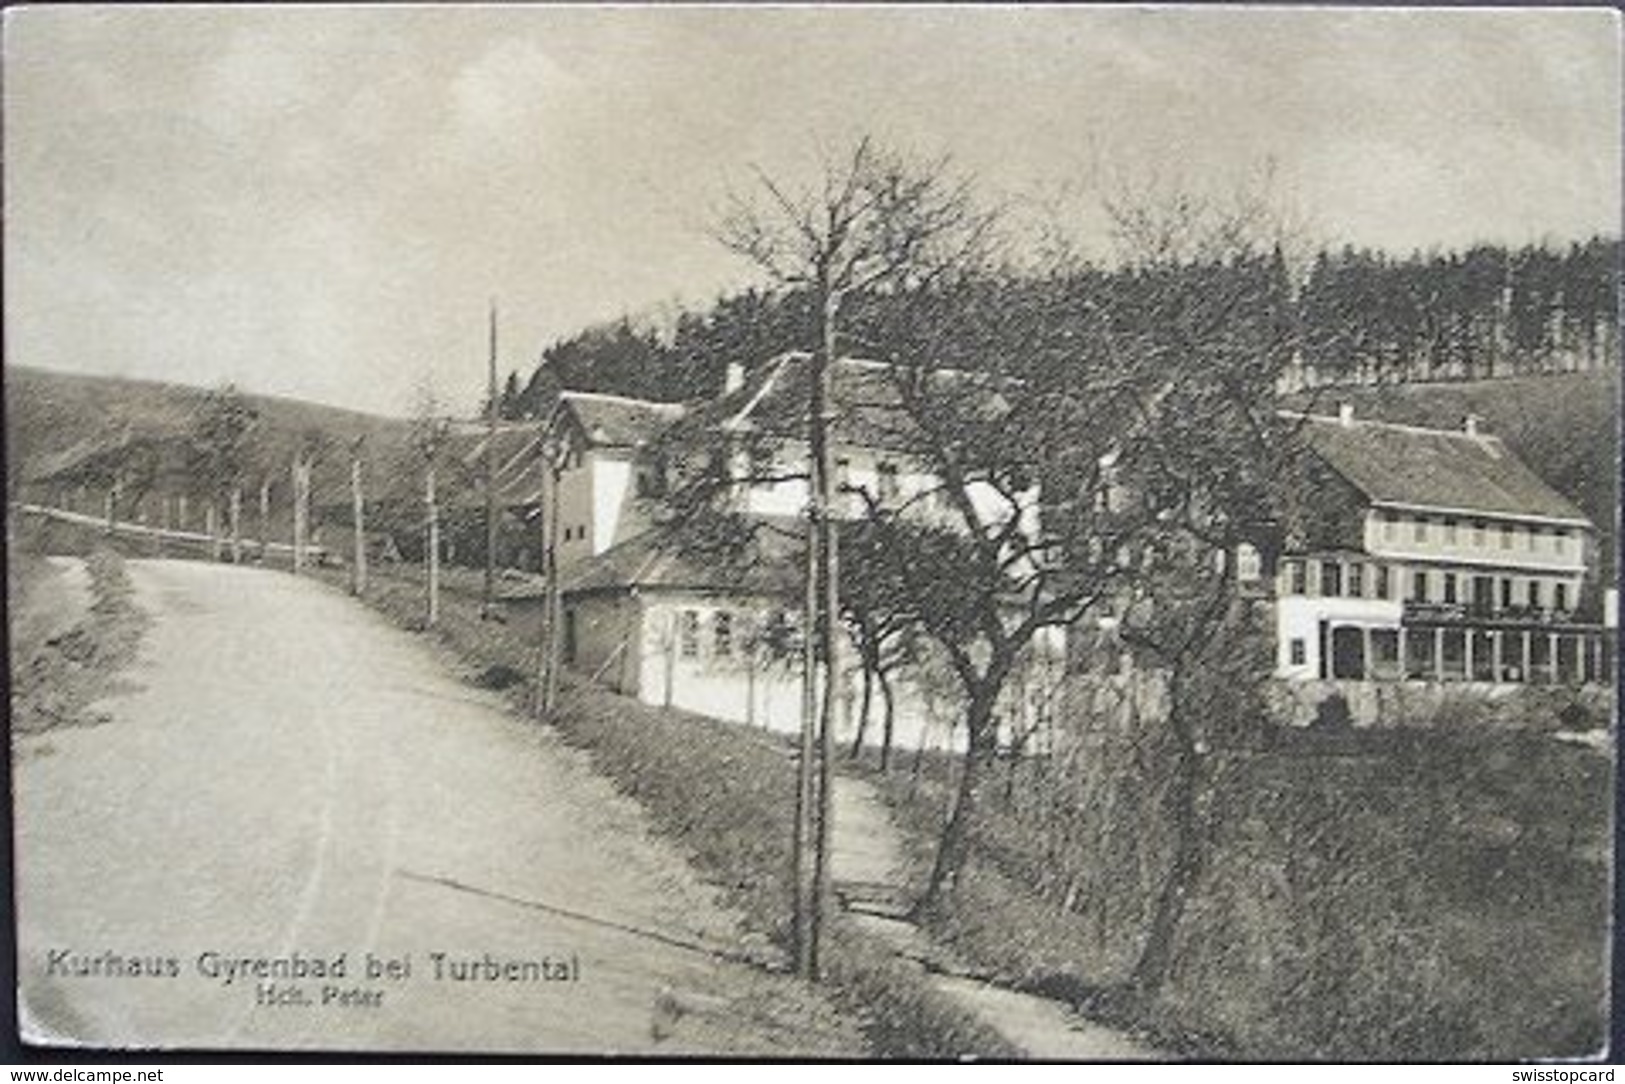 TURBENTHAL Kurhaus Gyrenbad Hch. Peter - Turbenthal